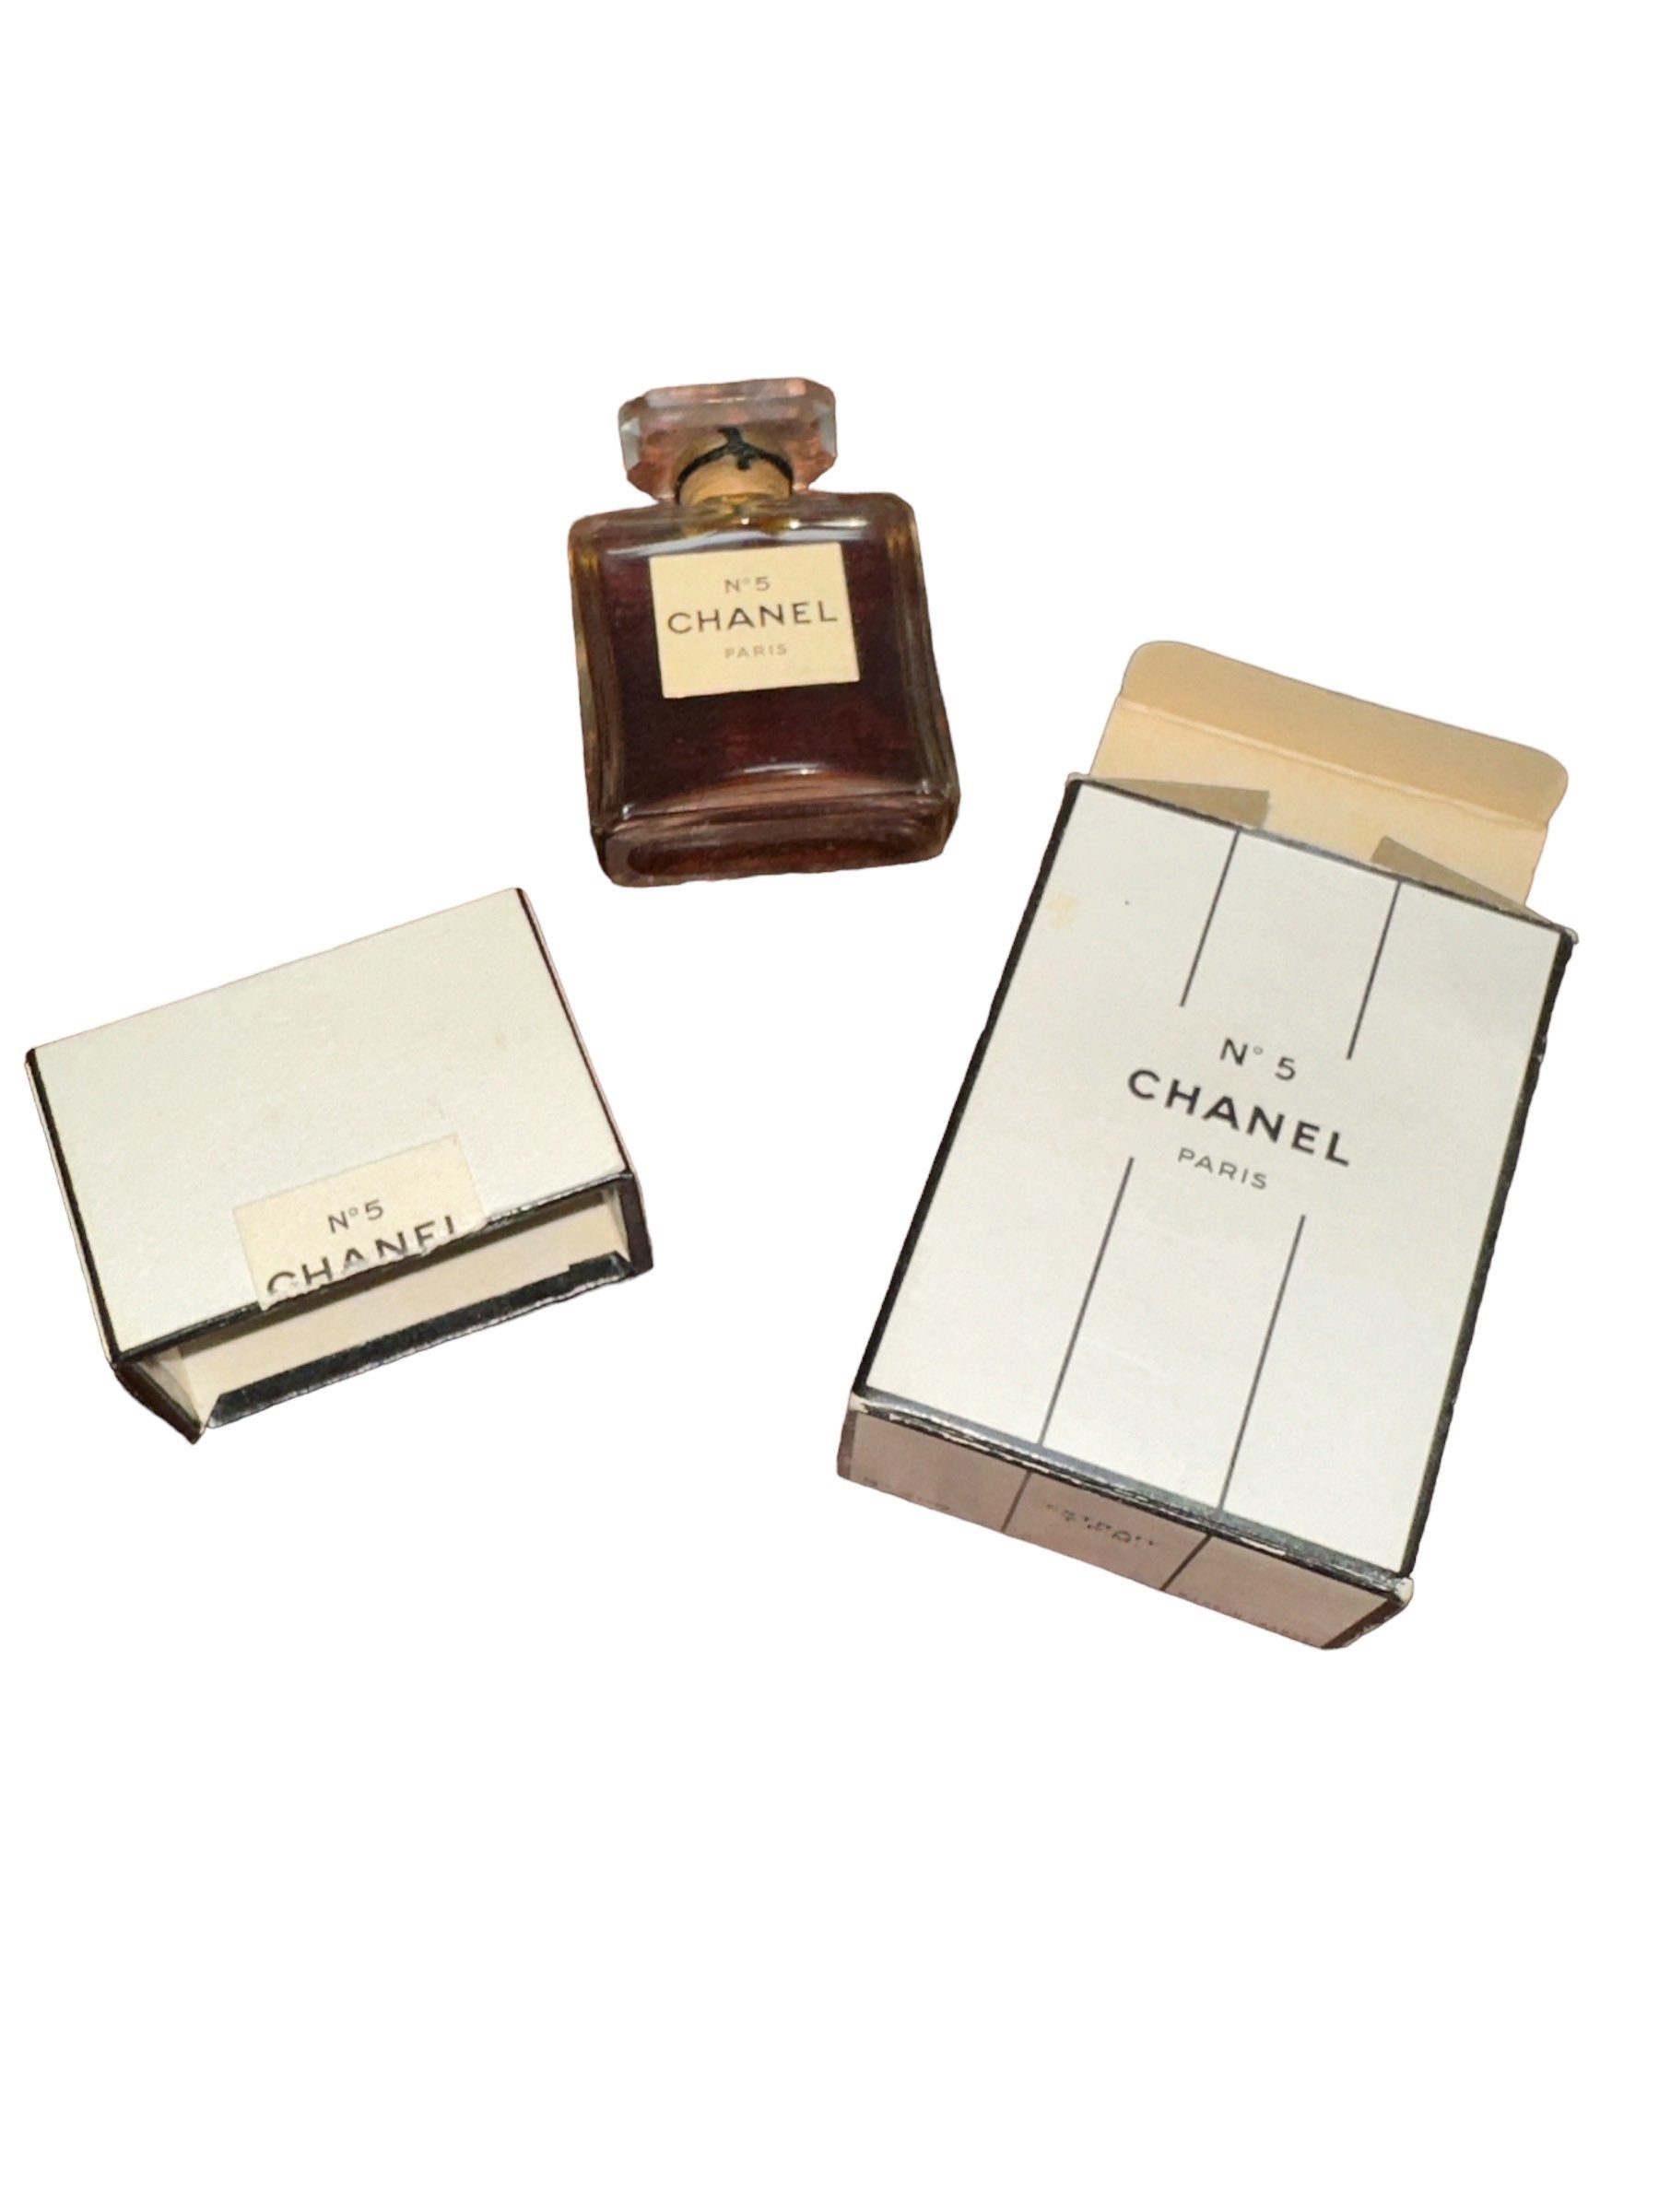 Chanel No 5 Original 